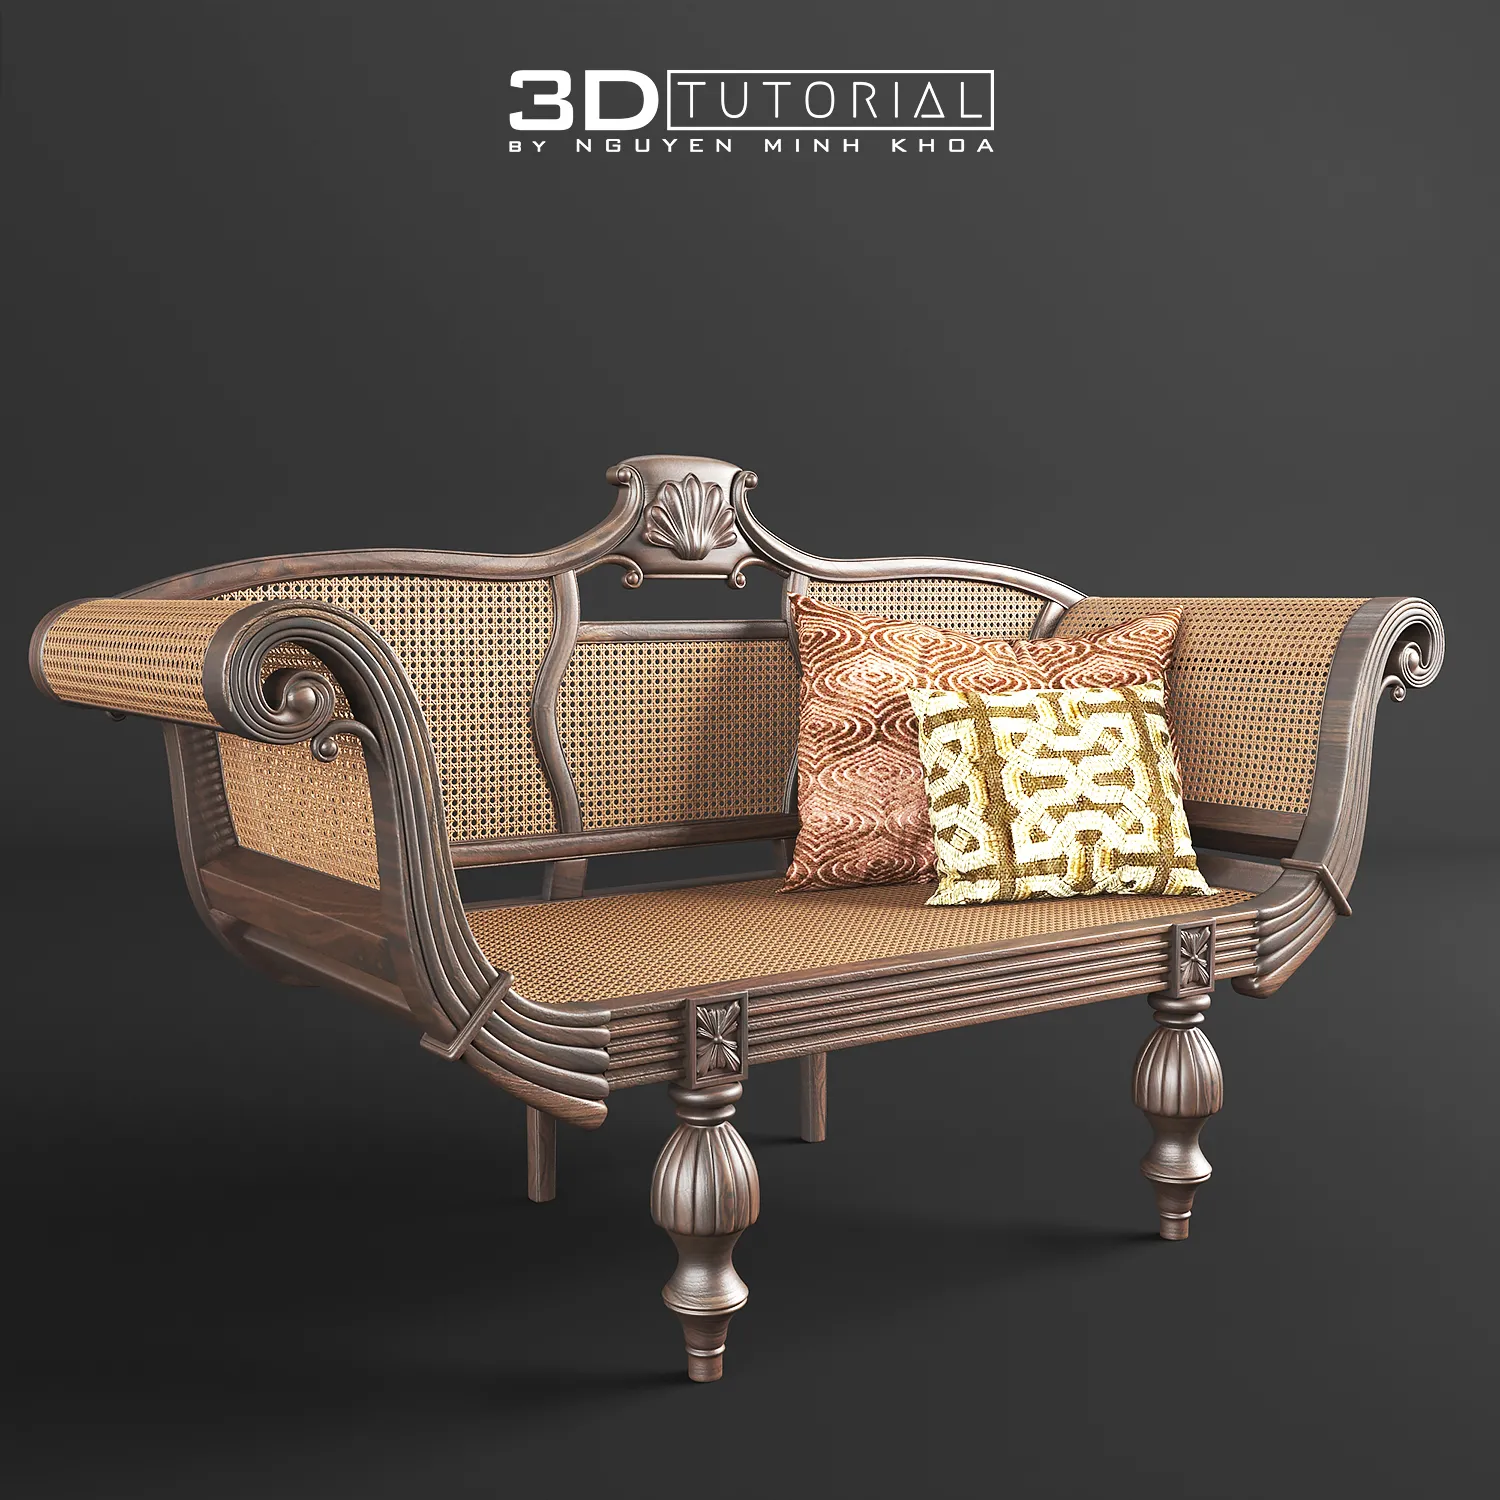 FURNITURE 3D MODELS – Indochine Bench modelbyNguyenMinhKhoa